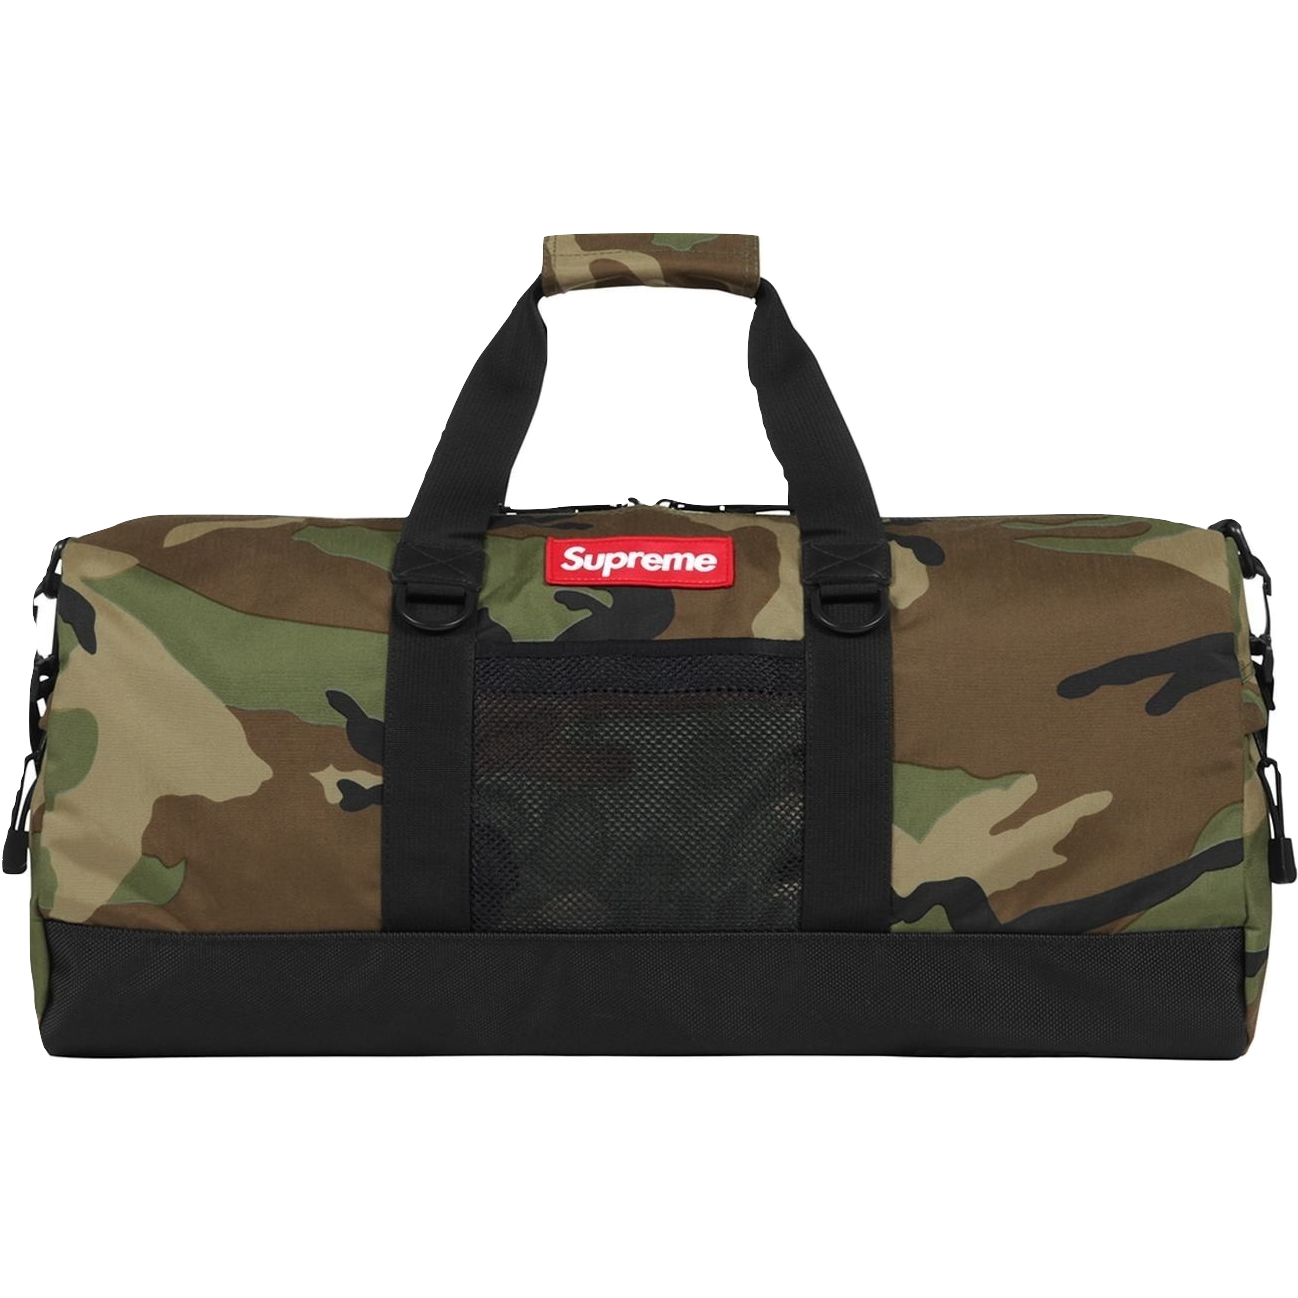 Supreme Contour Duffle Bag Woodland - Camo FW15 - Used